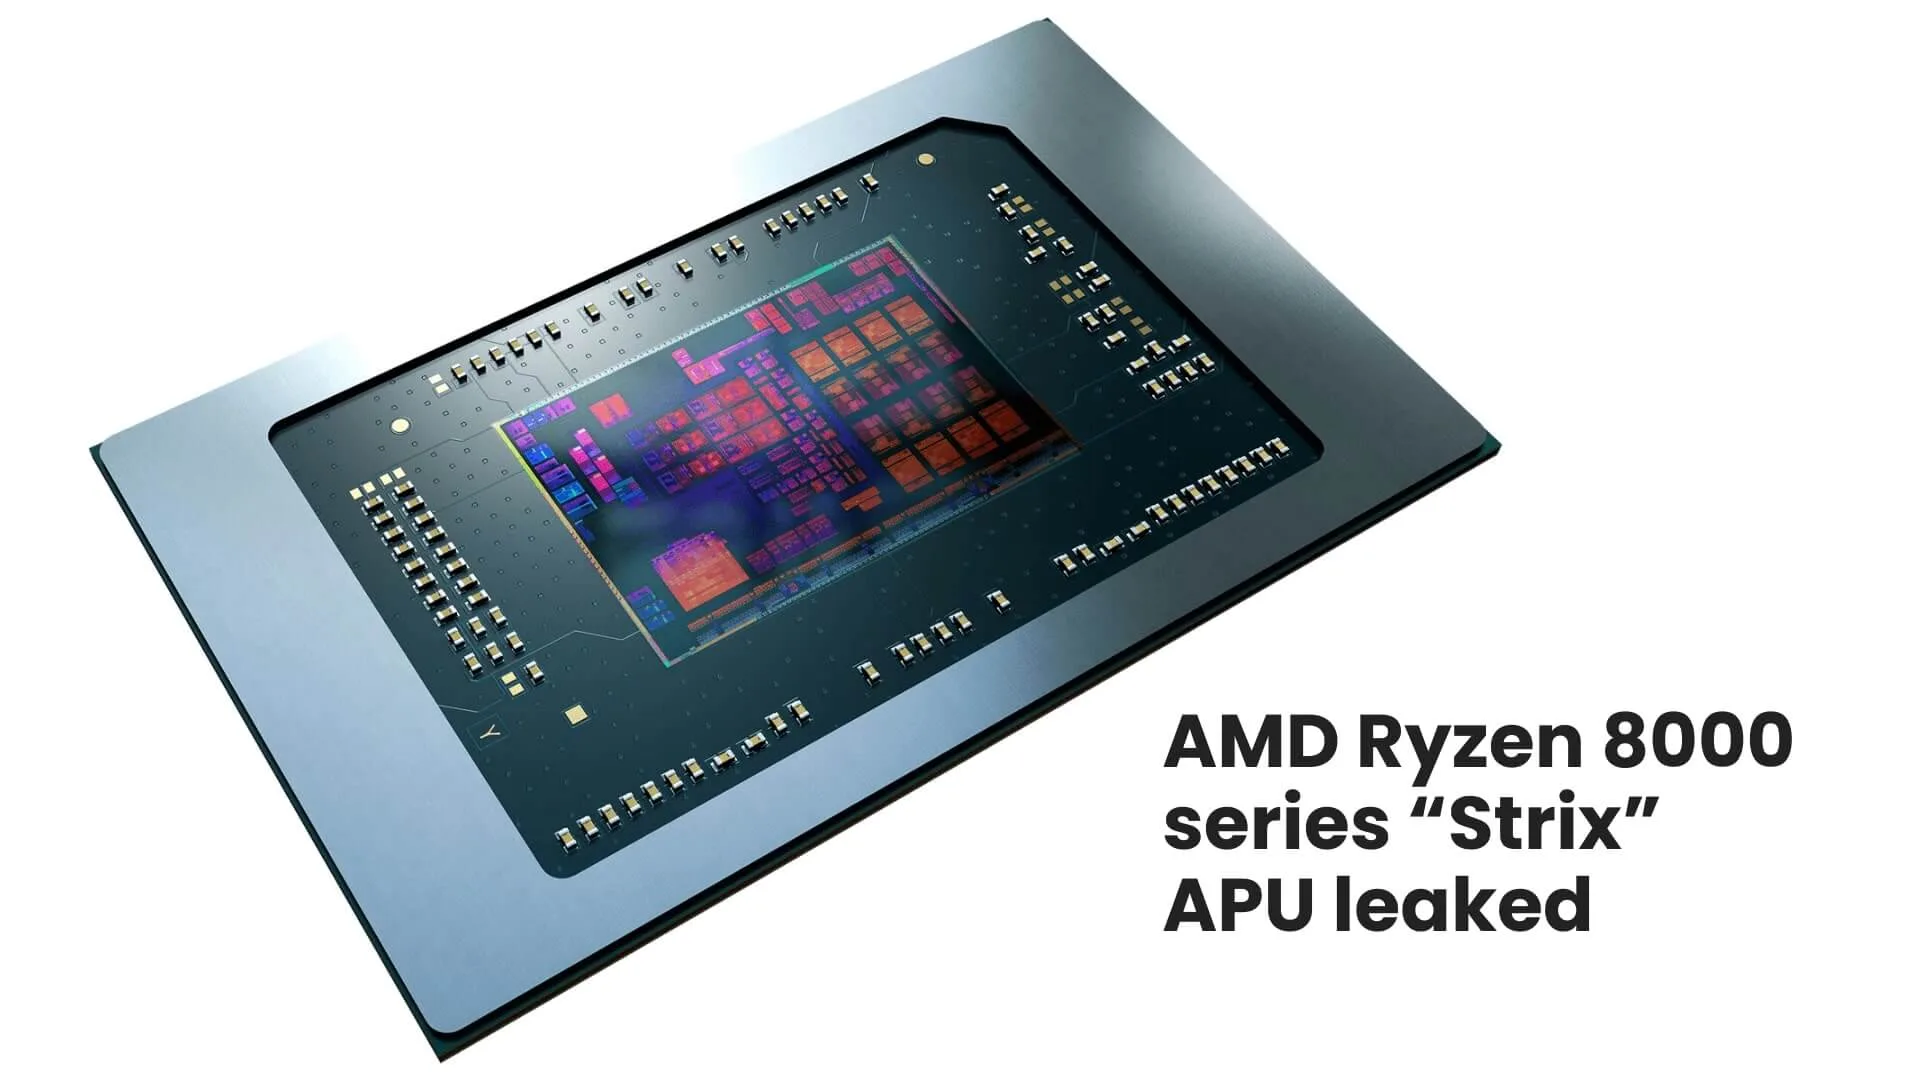 AMD Ryzen 8000 “Strix Point” APU Leaked